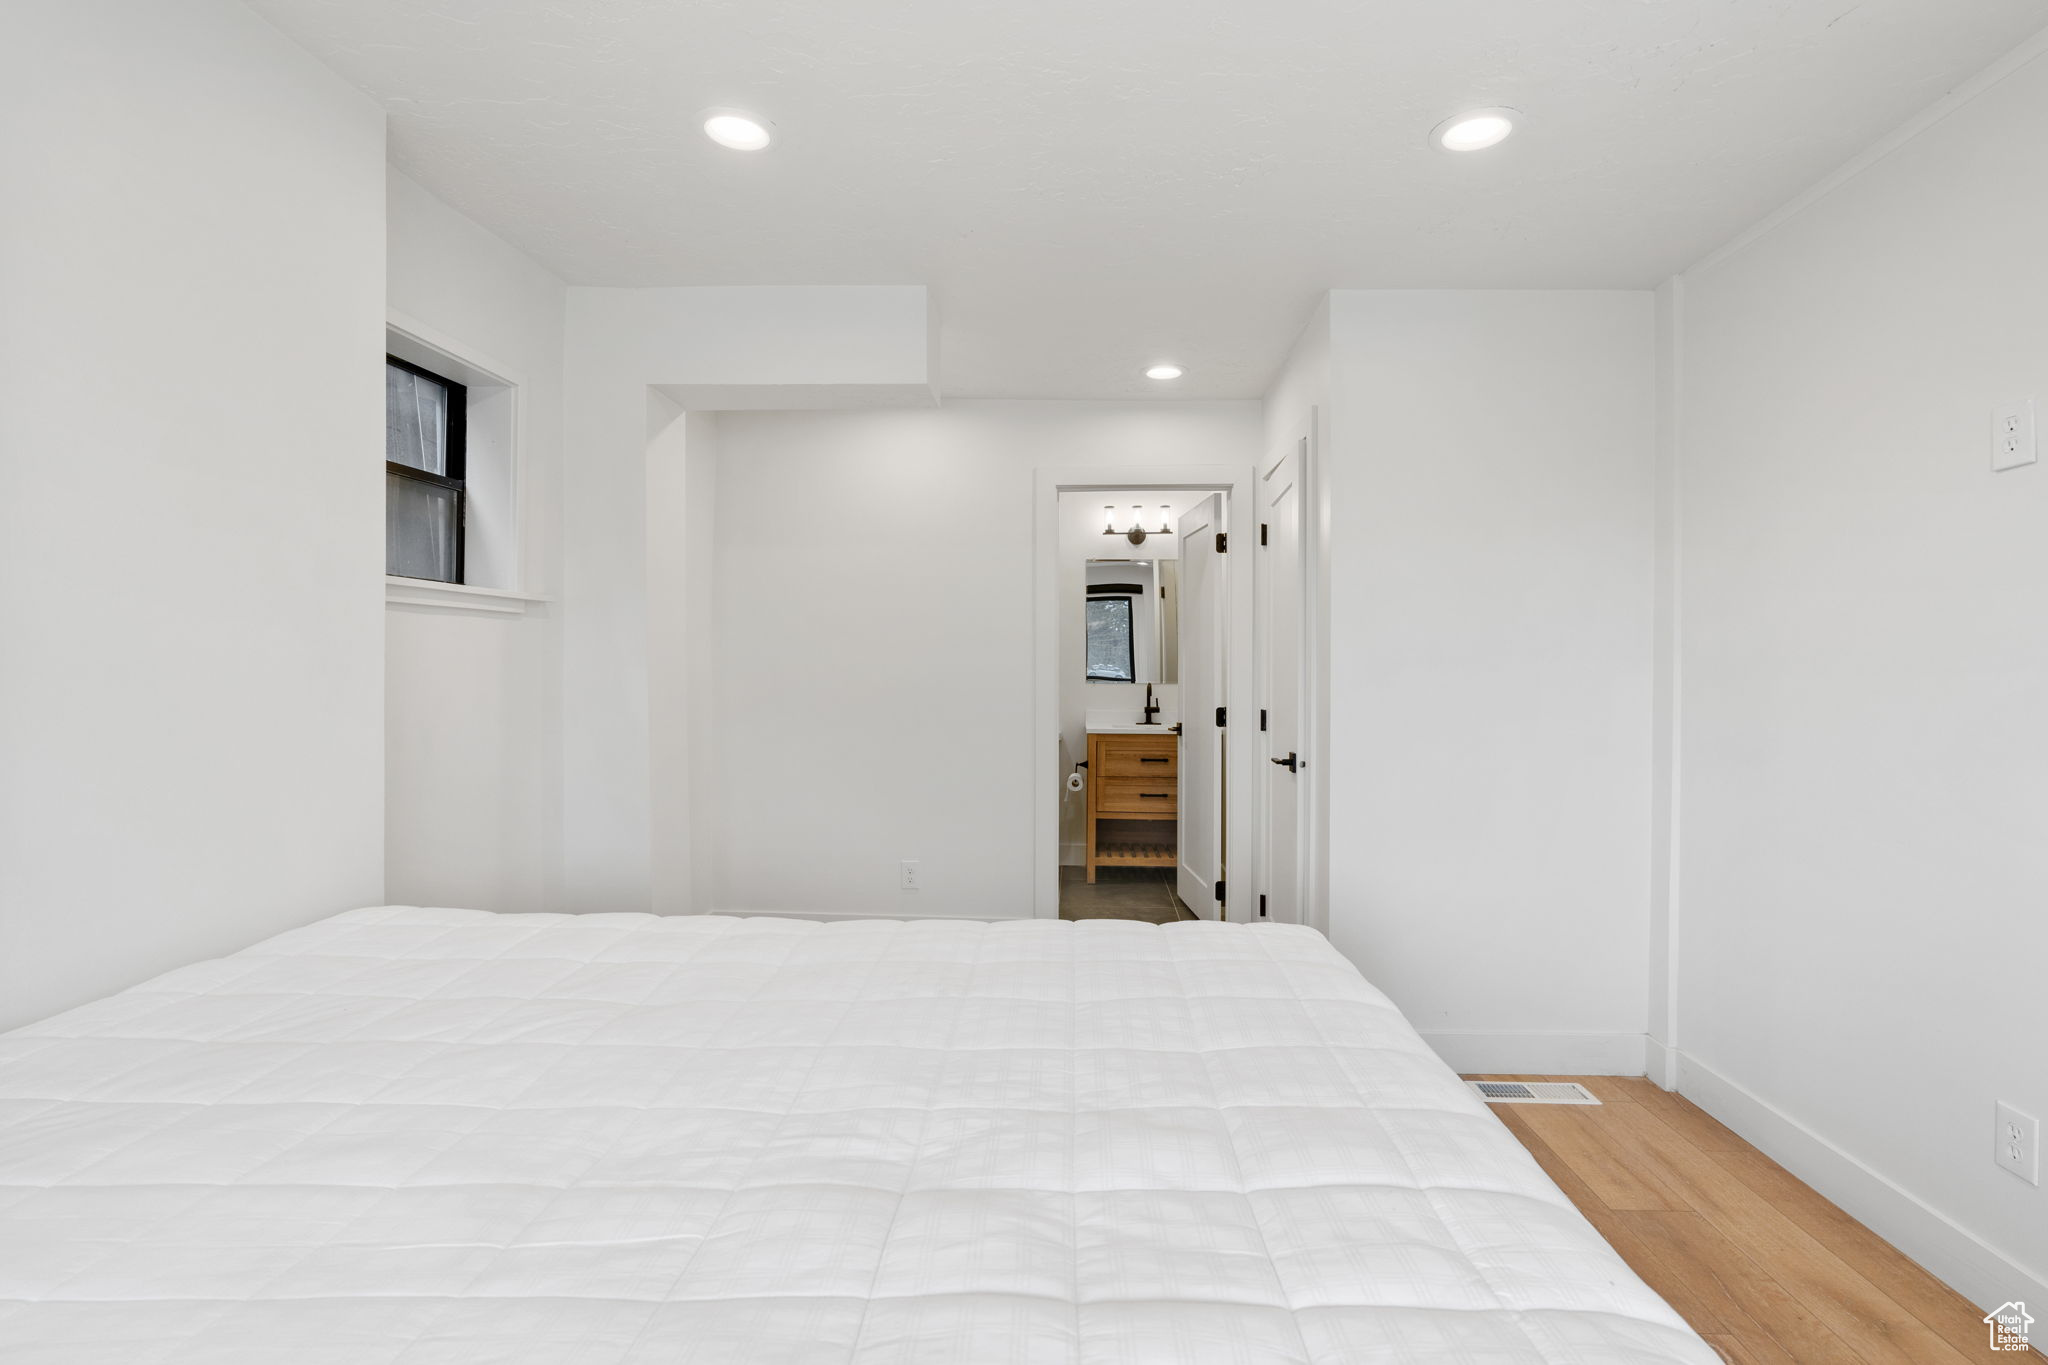 Bedroom featuring hardwood / wood-style flooring